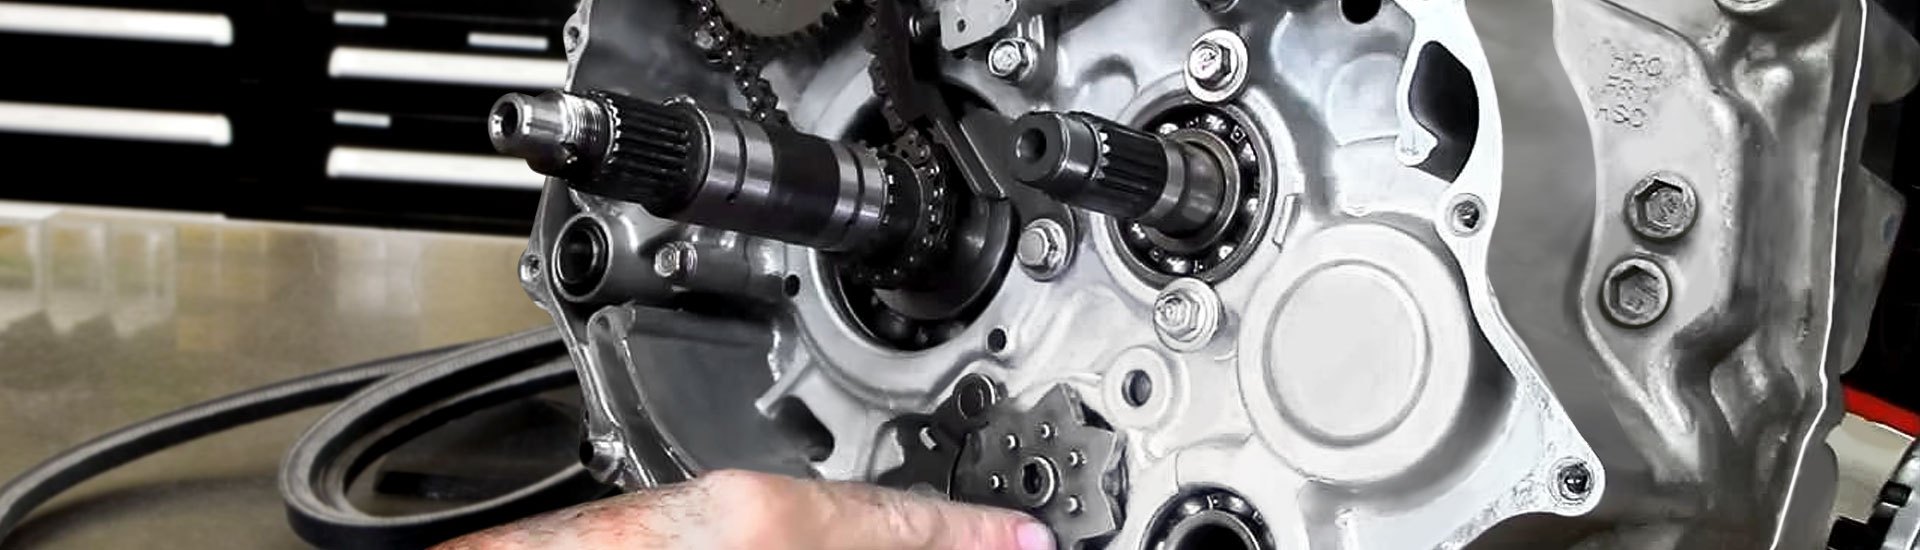 Sea-Doo RXT X 260 Engine Parts | Piston Kits, Clutches, Shims 